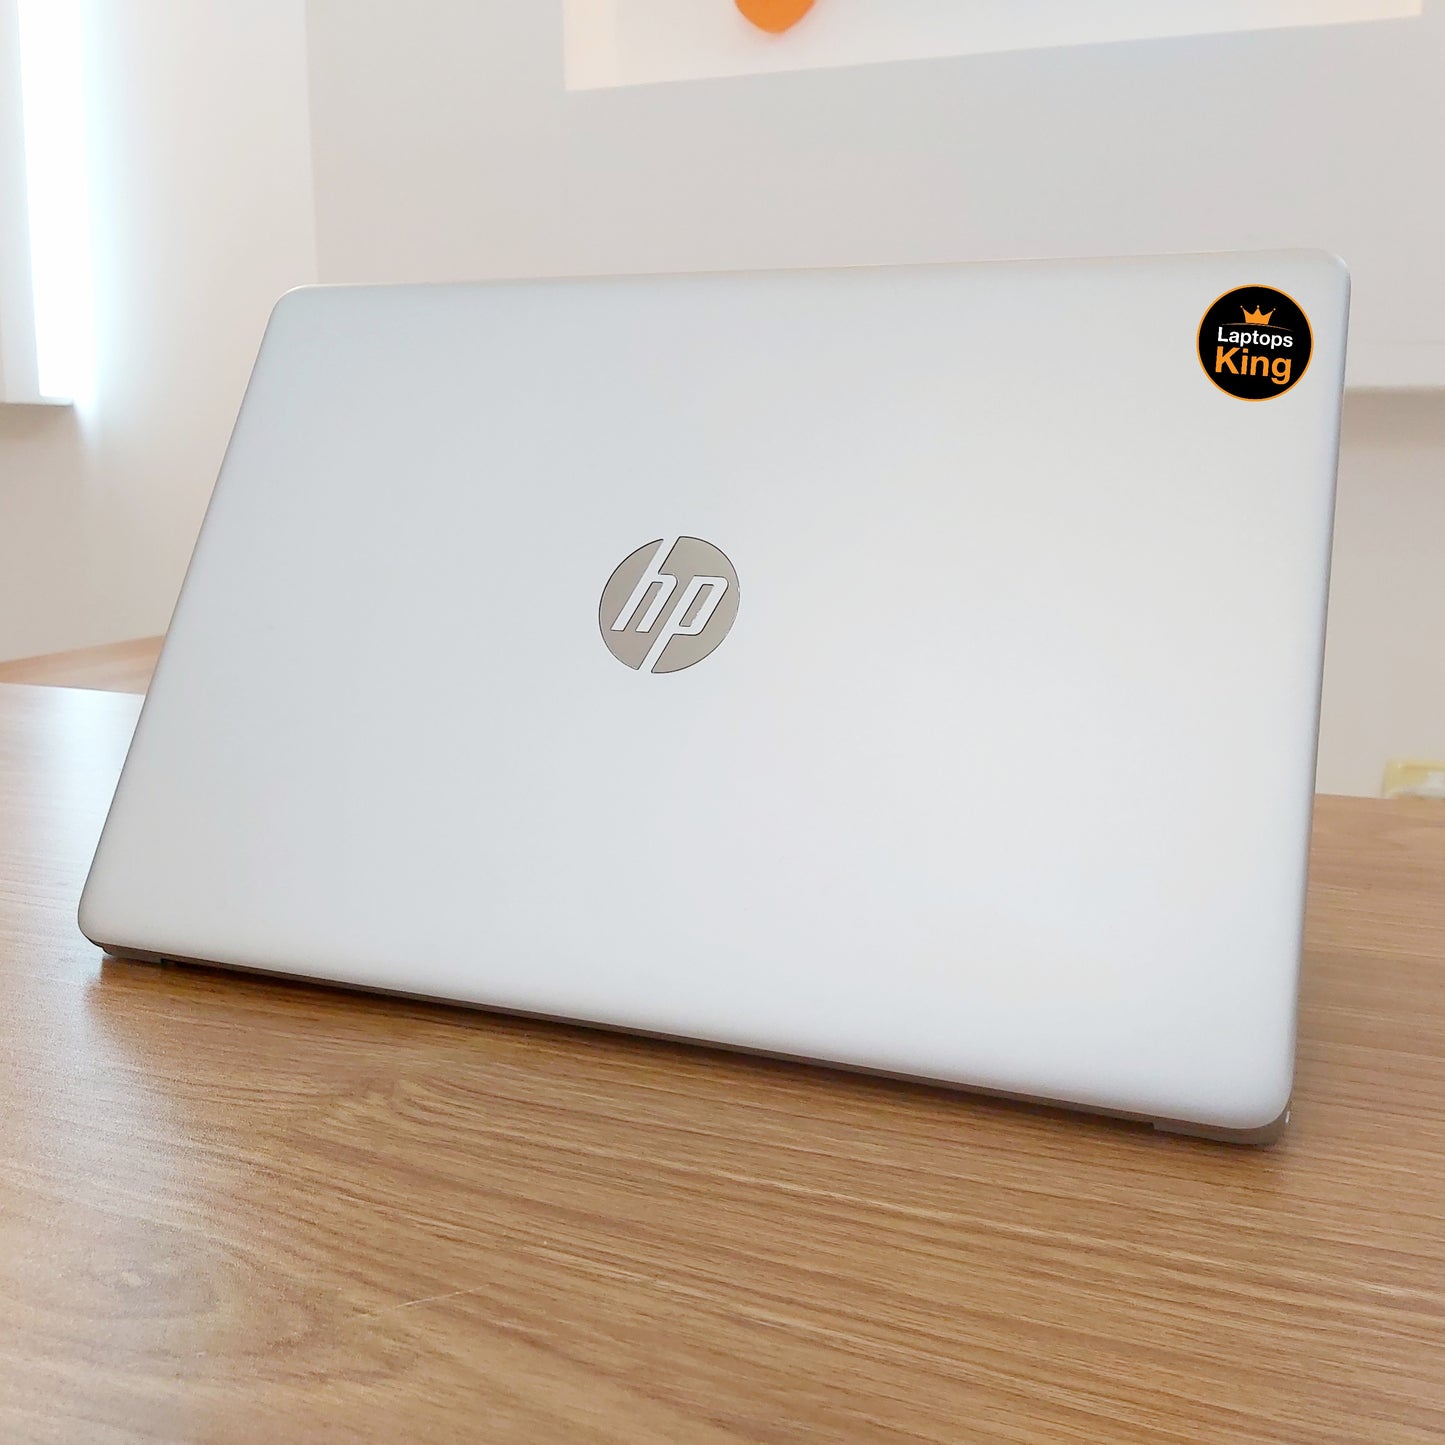 HP 15-DY2091WM i3-1115G4 15.6" Laptop (Brand New)